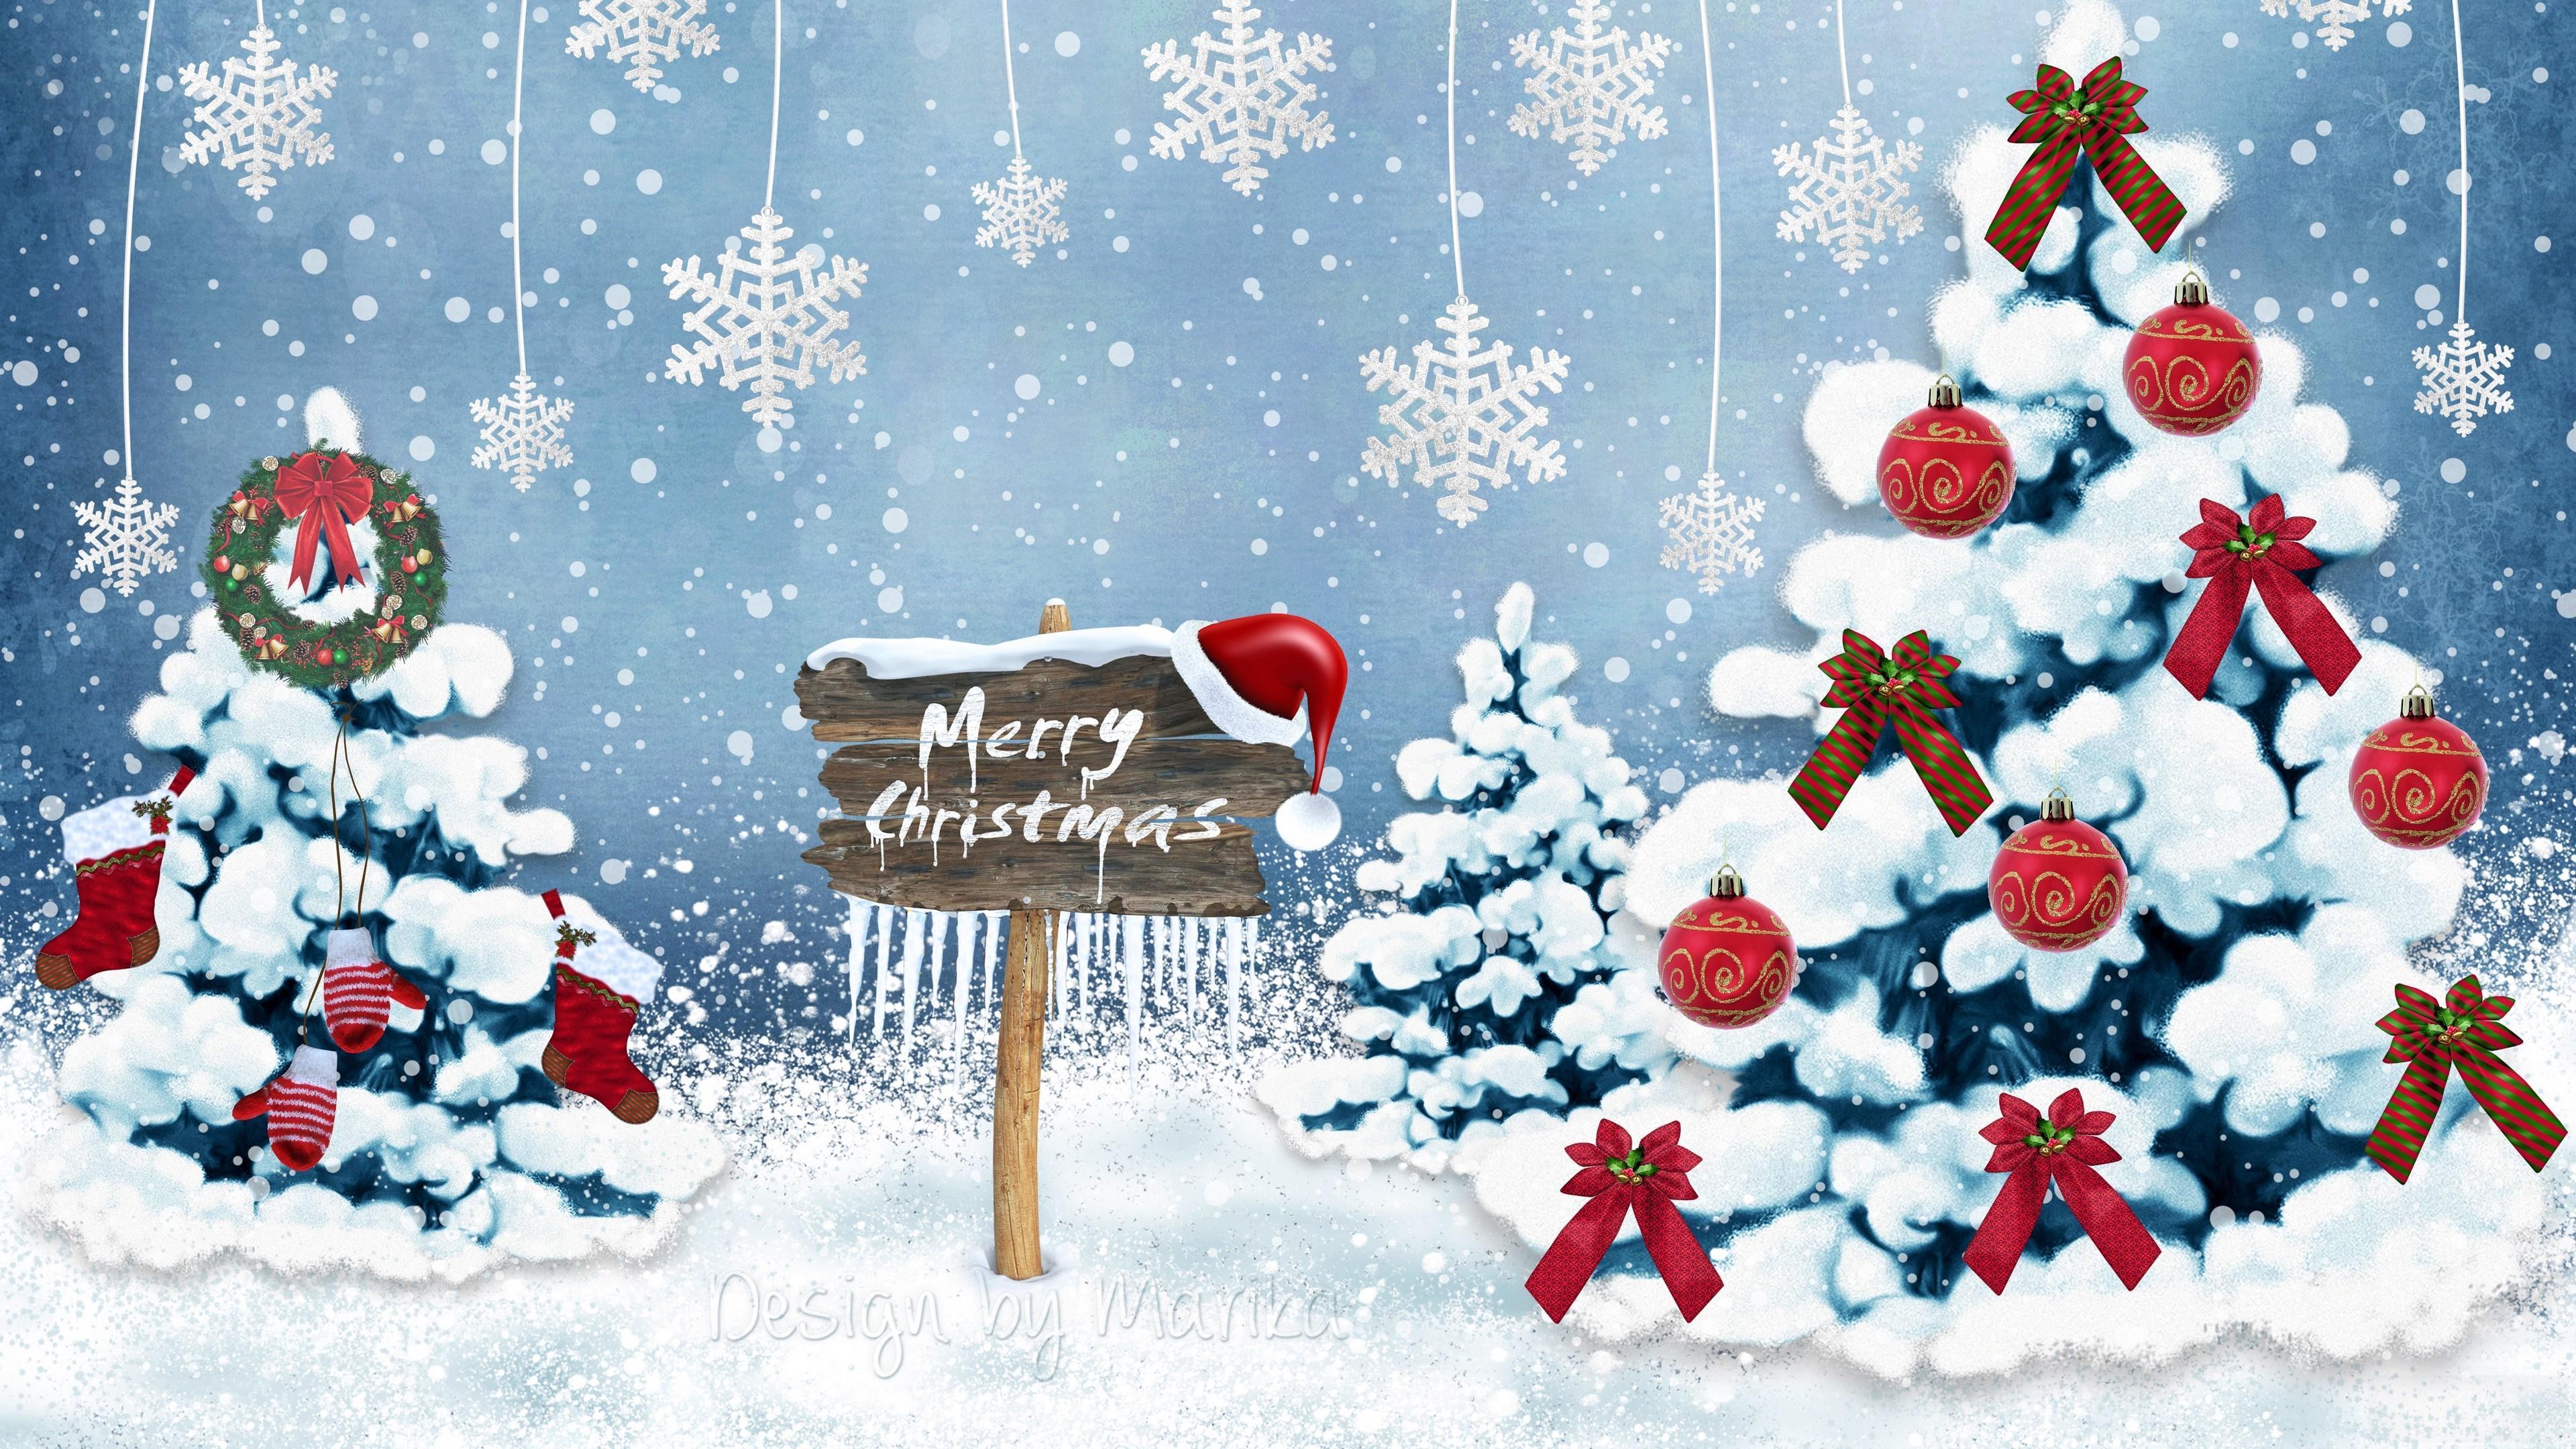 HD wallpaper, Card, Christmas, Snowflakes, New Year, Ornaments 4K, Christmas Trees